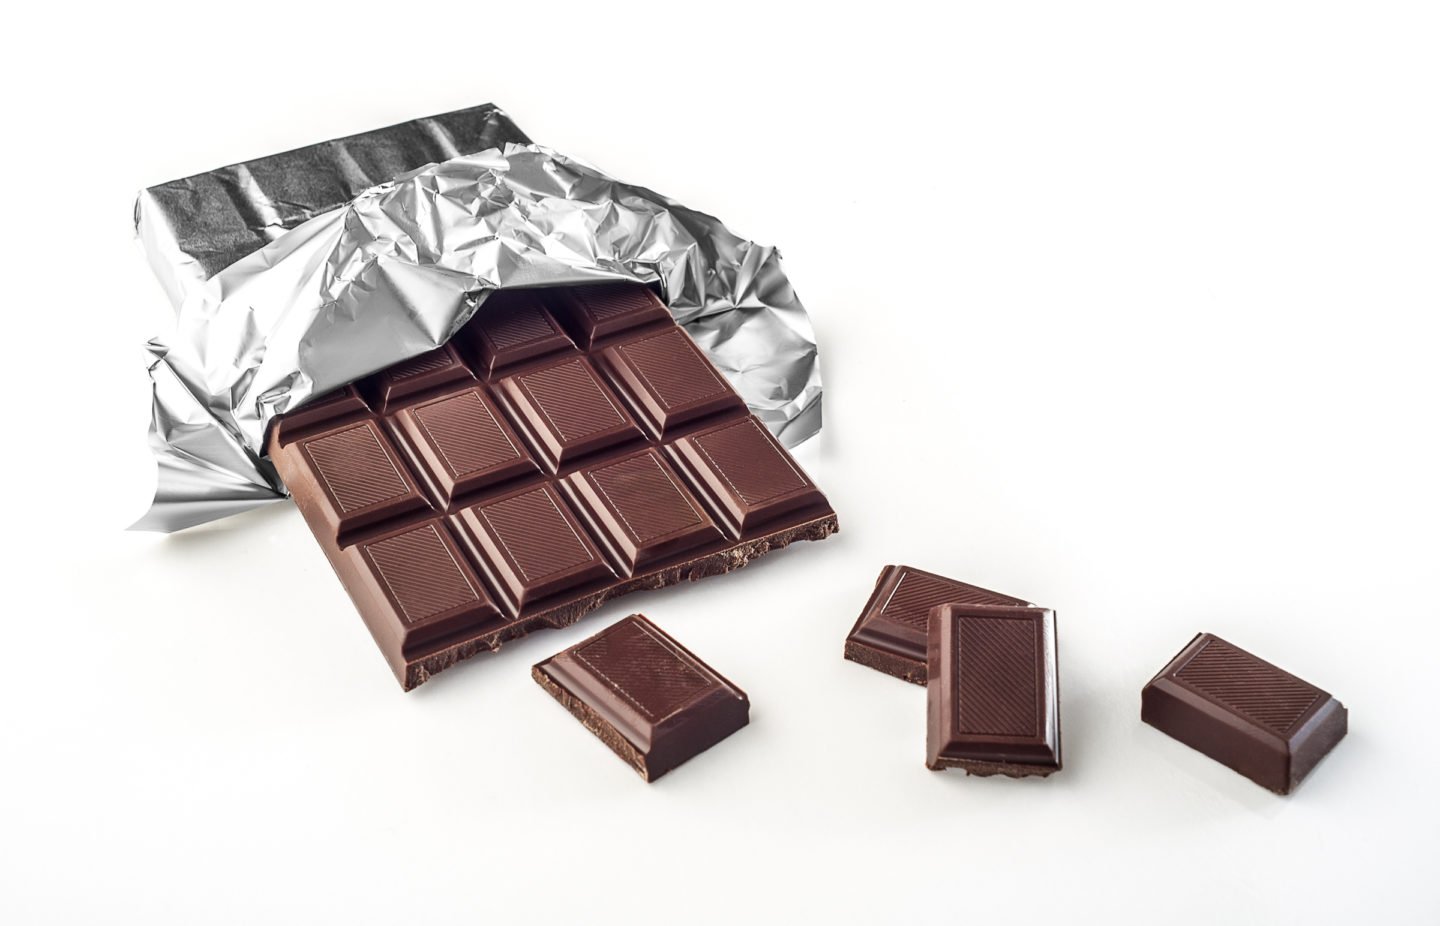 regular chocolate bar as cocoa powder substitute